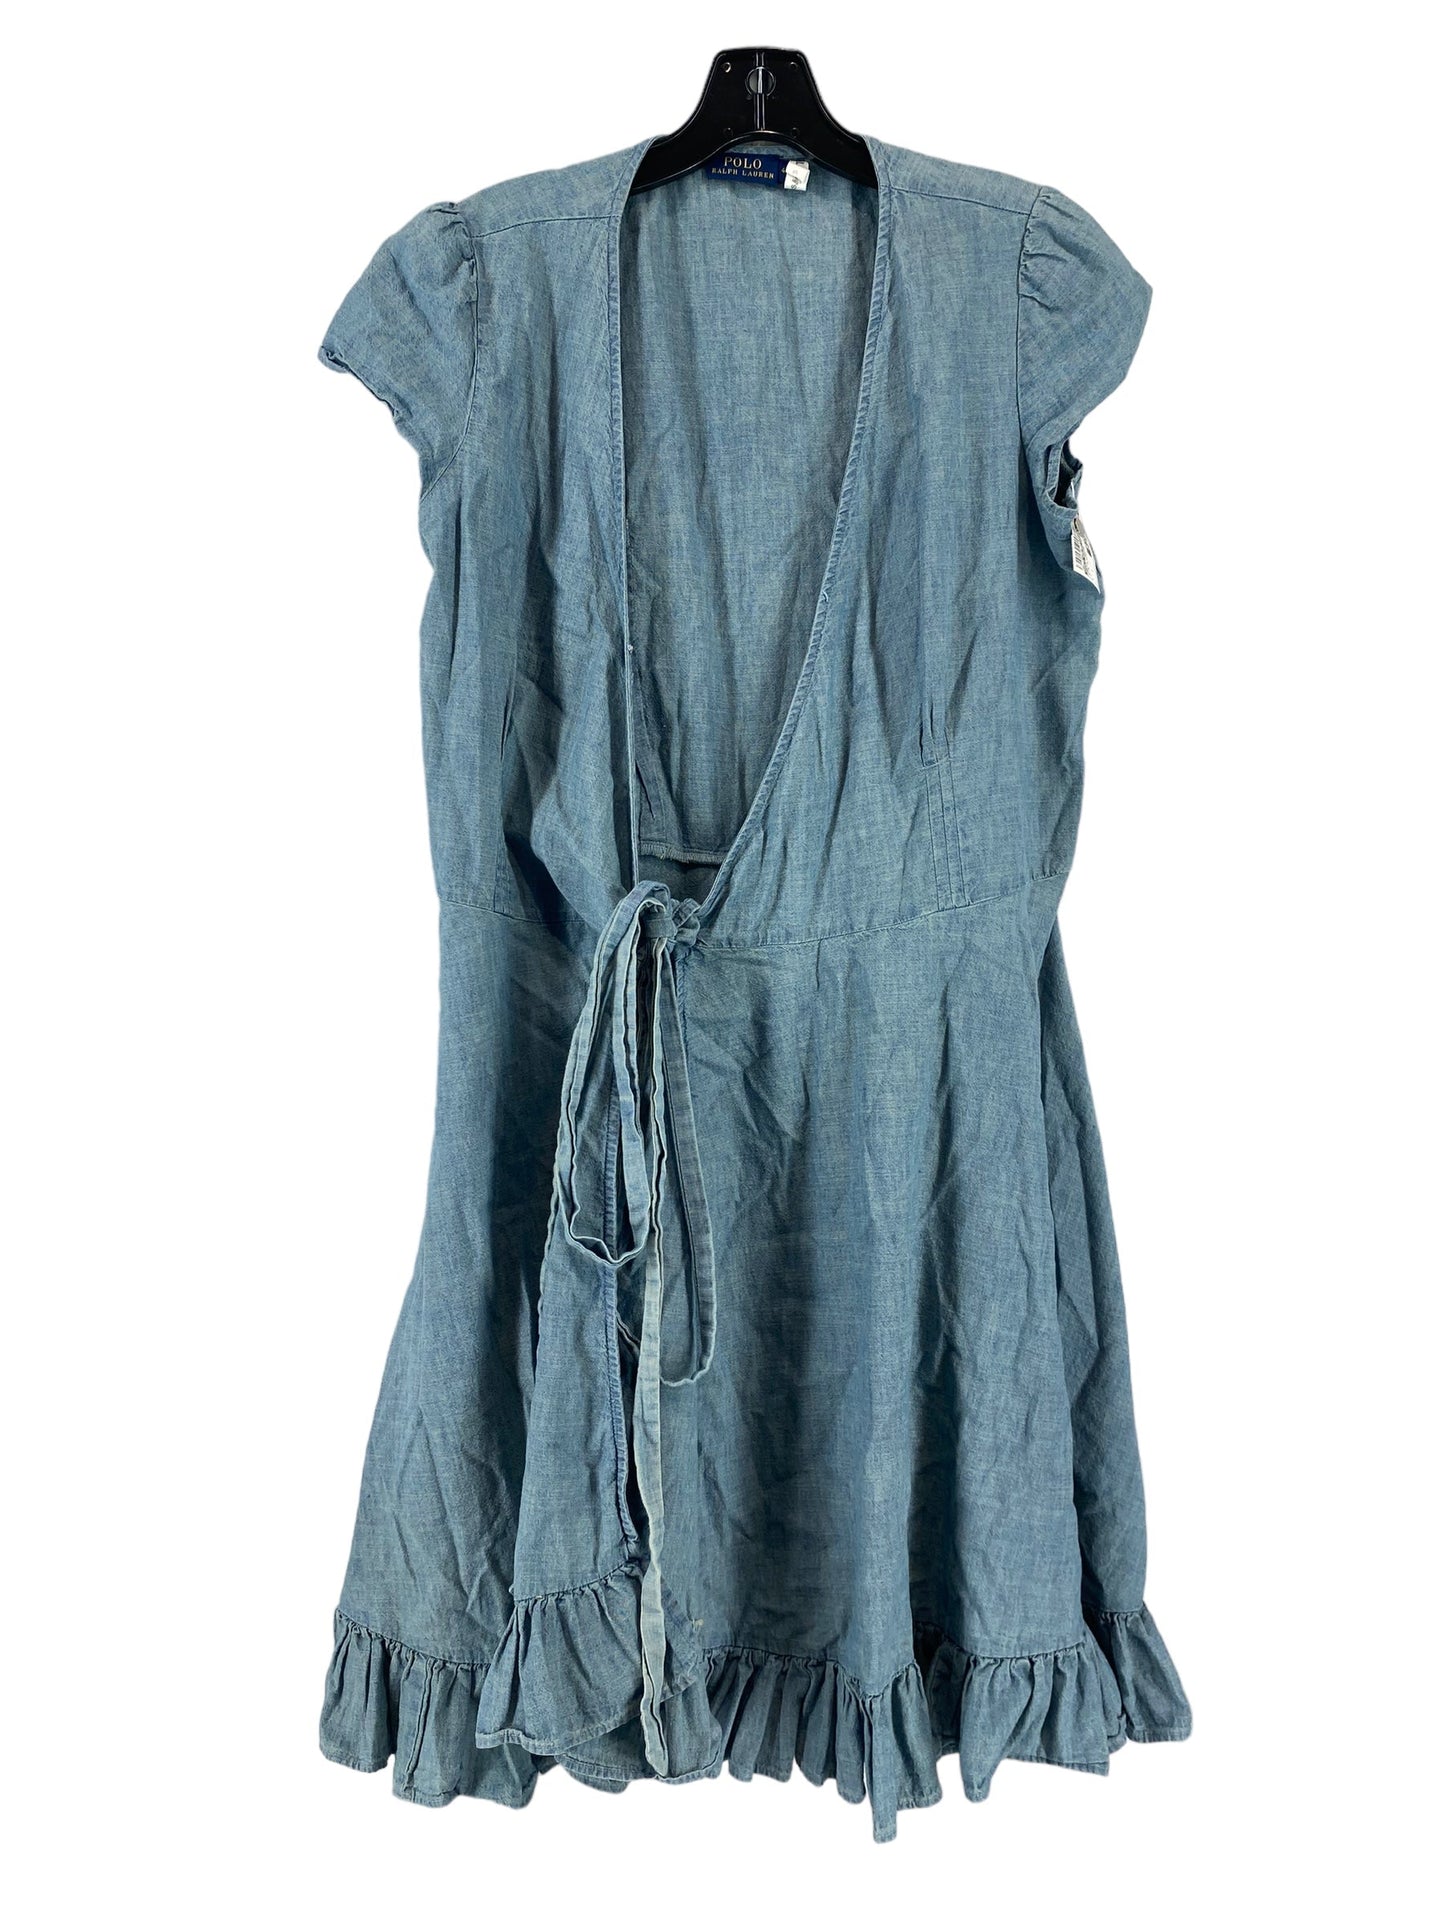 Blue Denim Dress Casual Midi Polo Ralph Lauren, Size 4